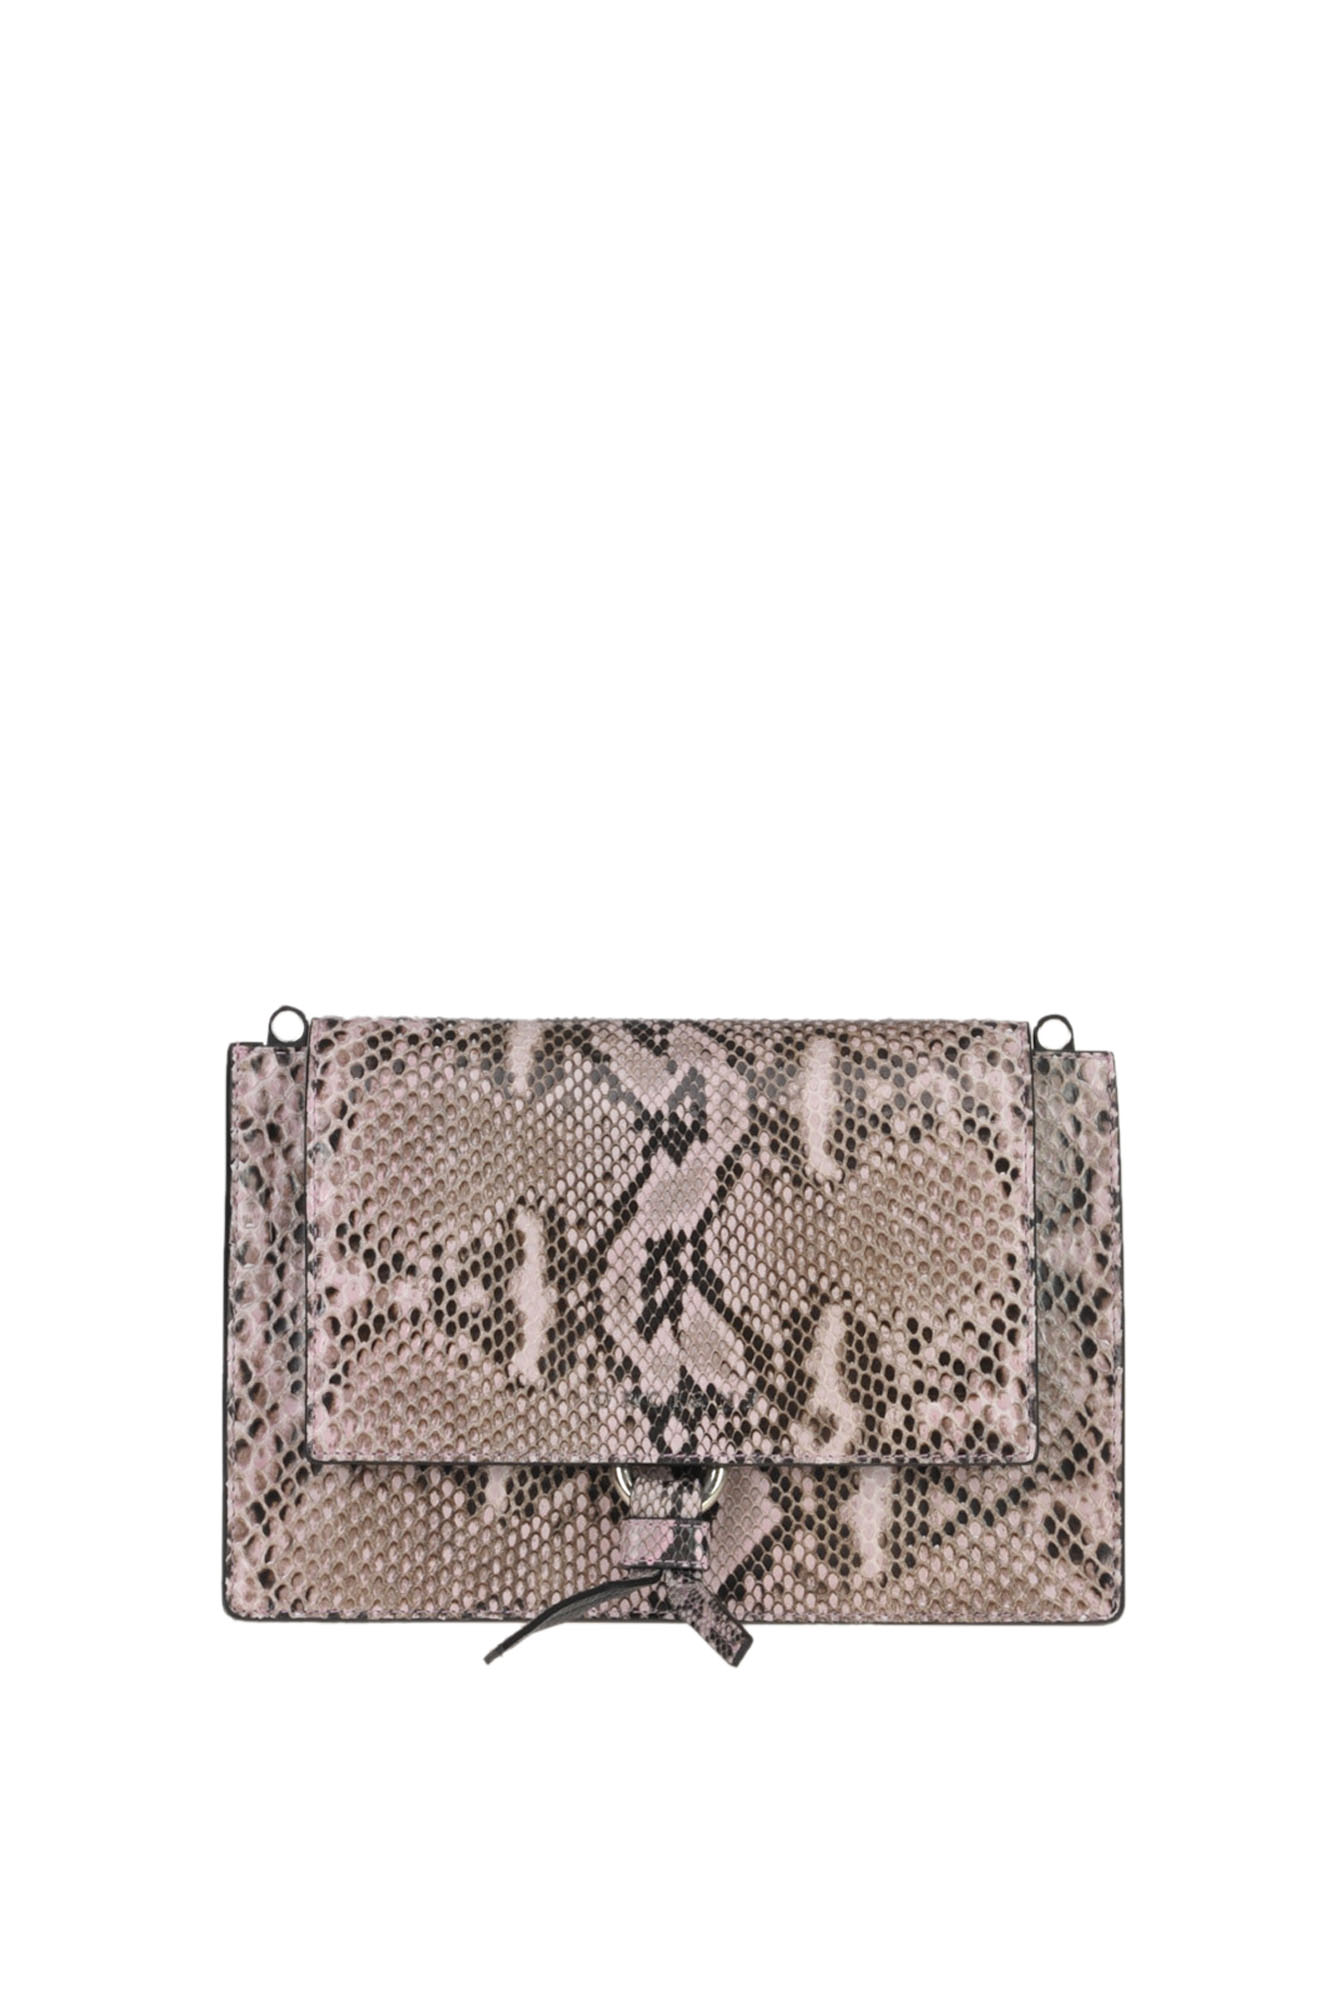 Orciani Python Leather Shoulder Bag In Pale Pink